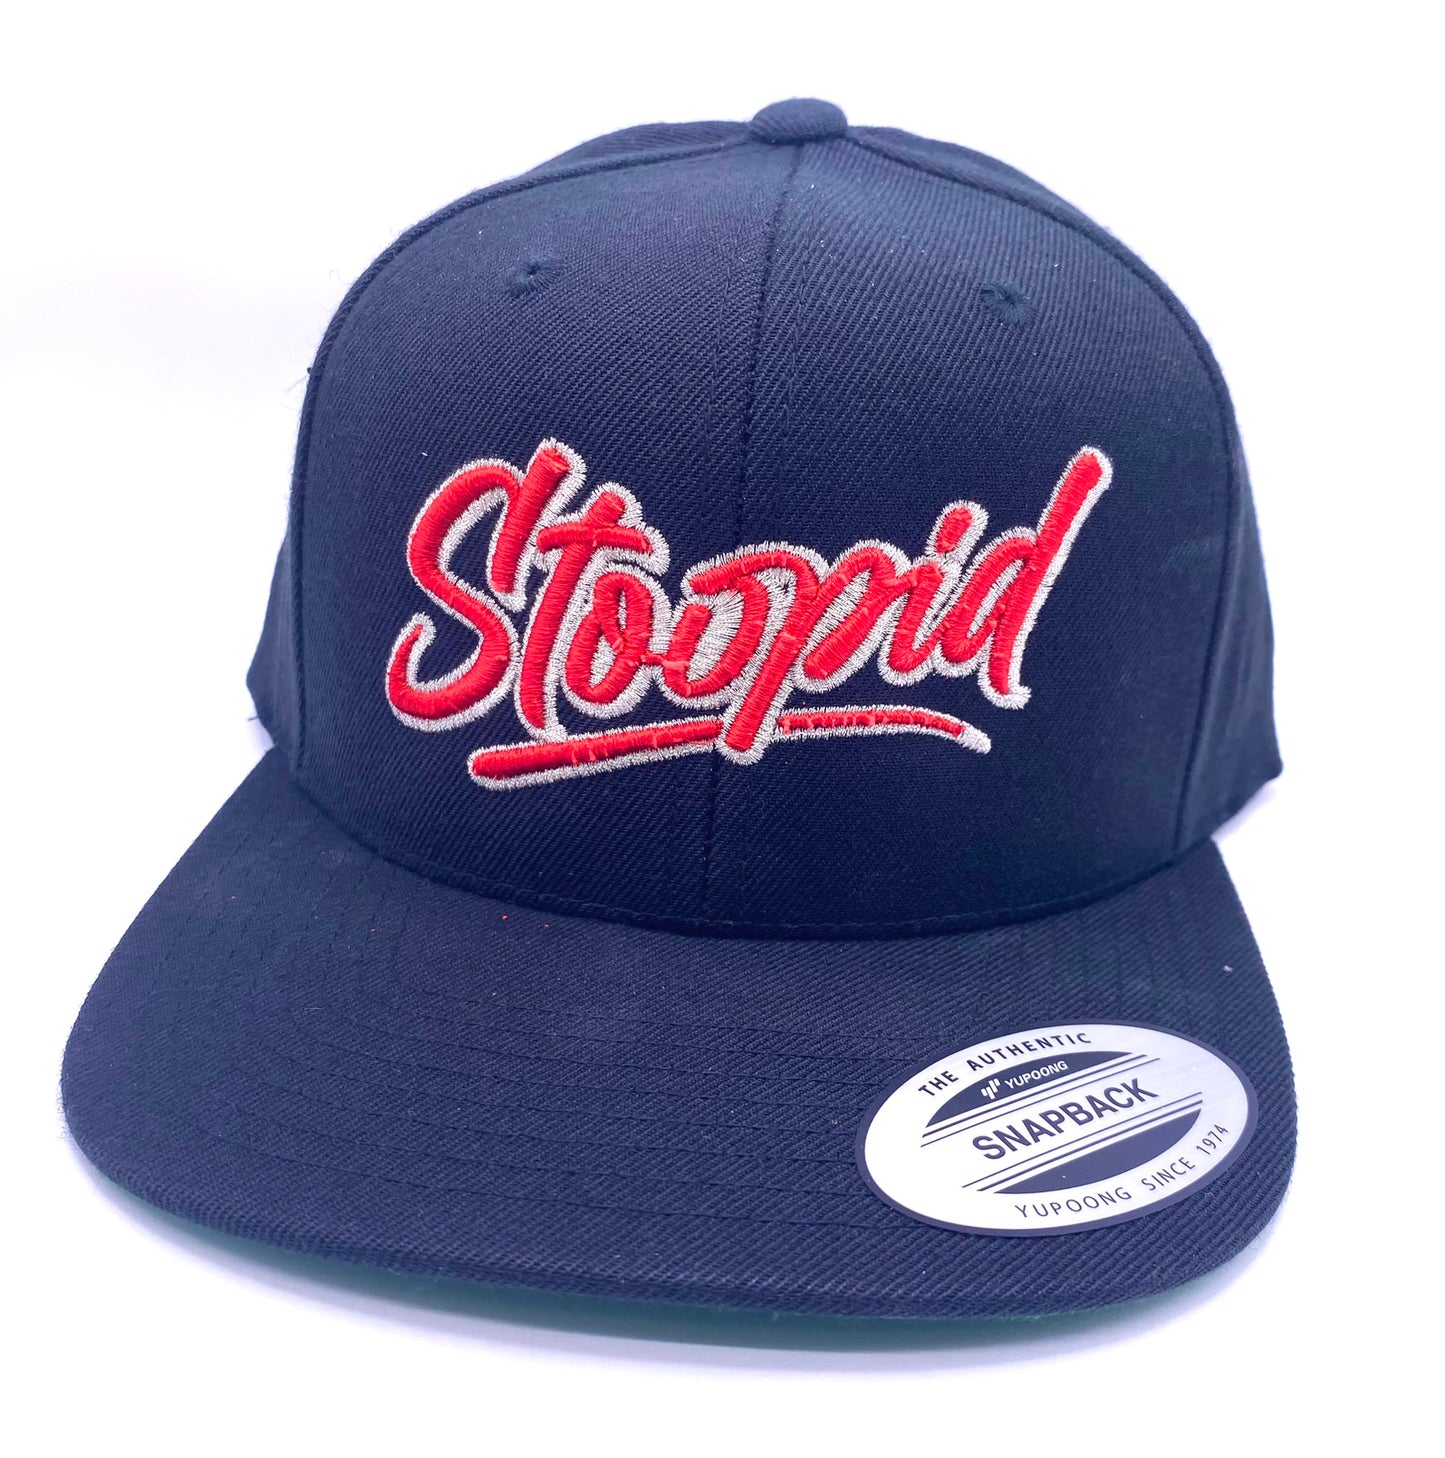 "The Original" Flatbill Snapback Embroidered Stoopid Hat